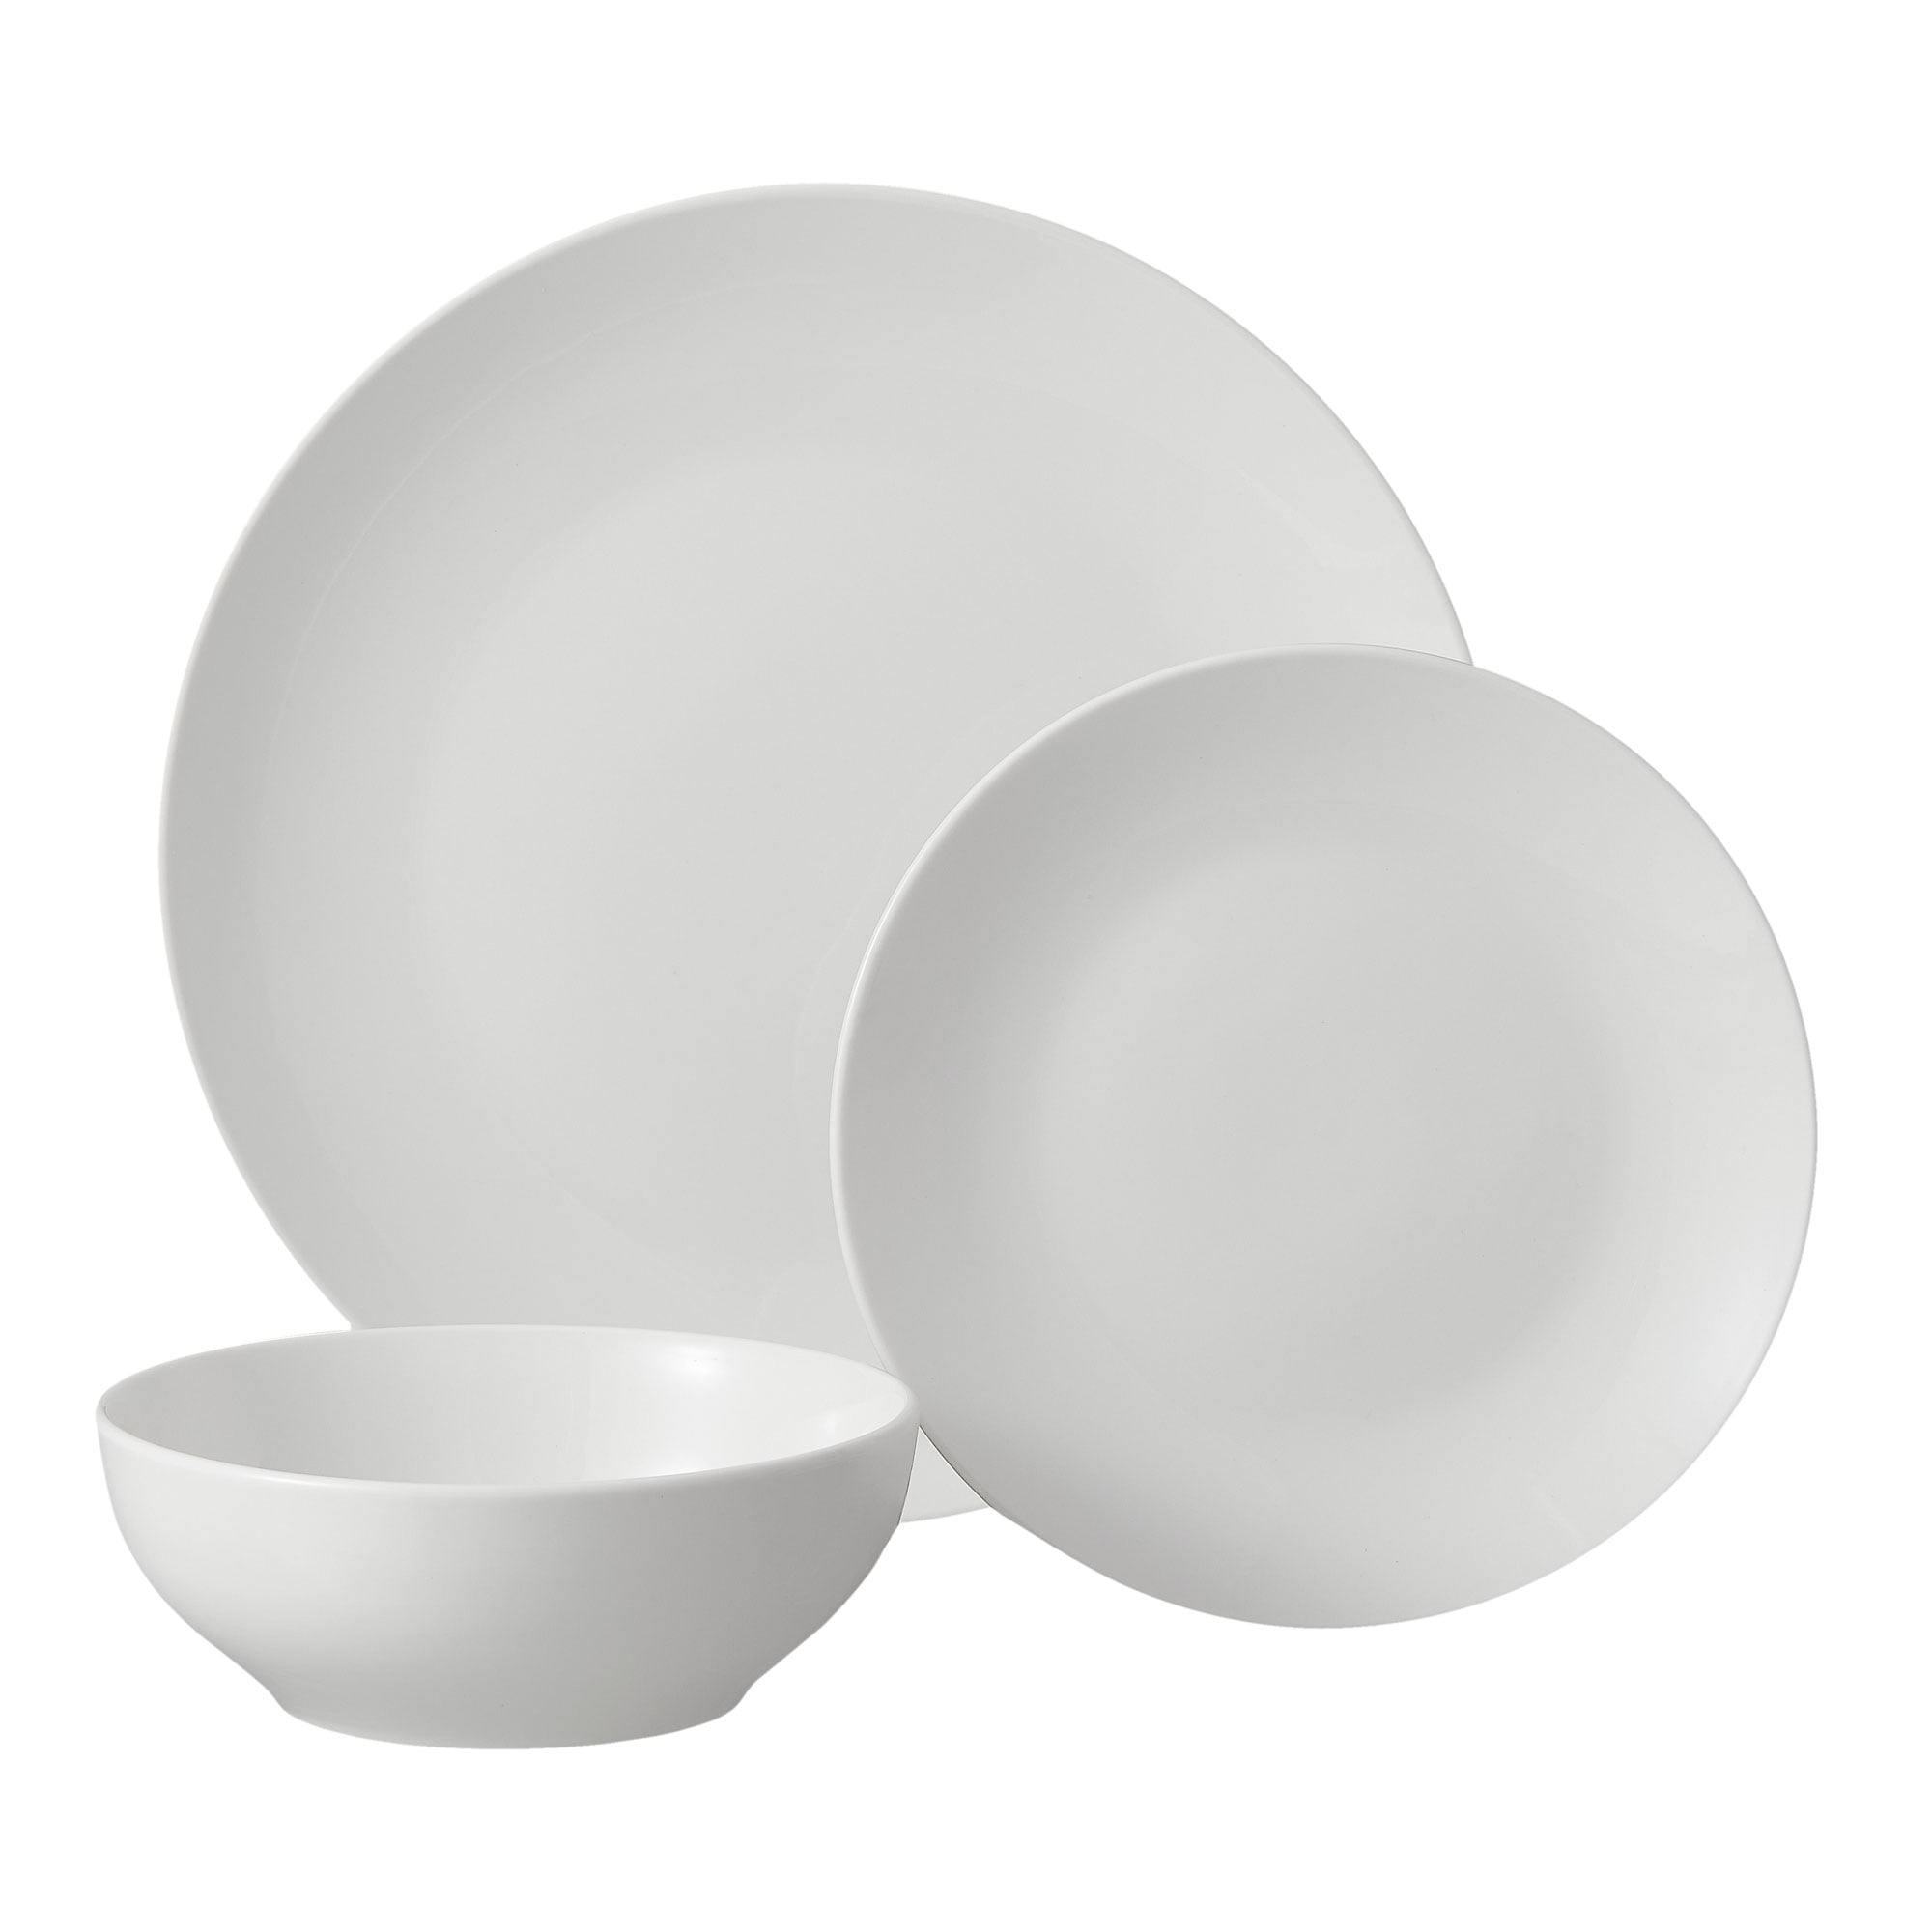 12 Piece Global Monochrome Dinner Set Home Bowls Plates Porcelain Grey White New 